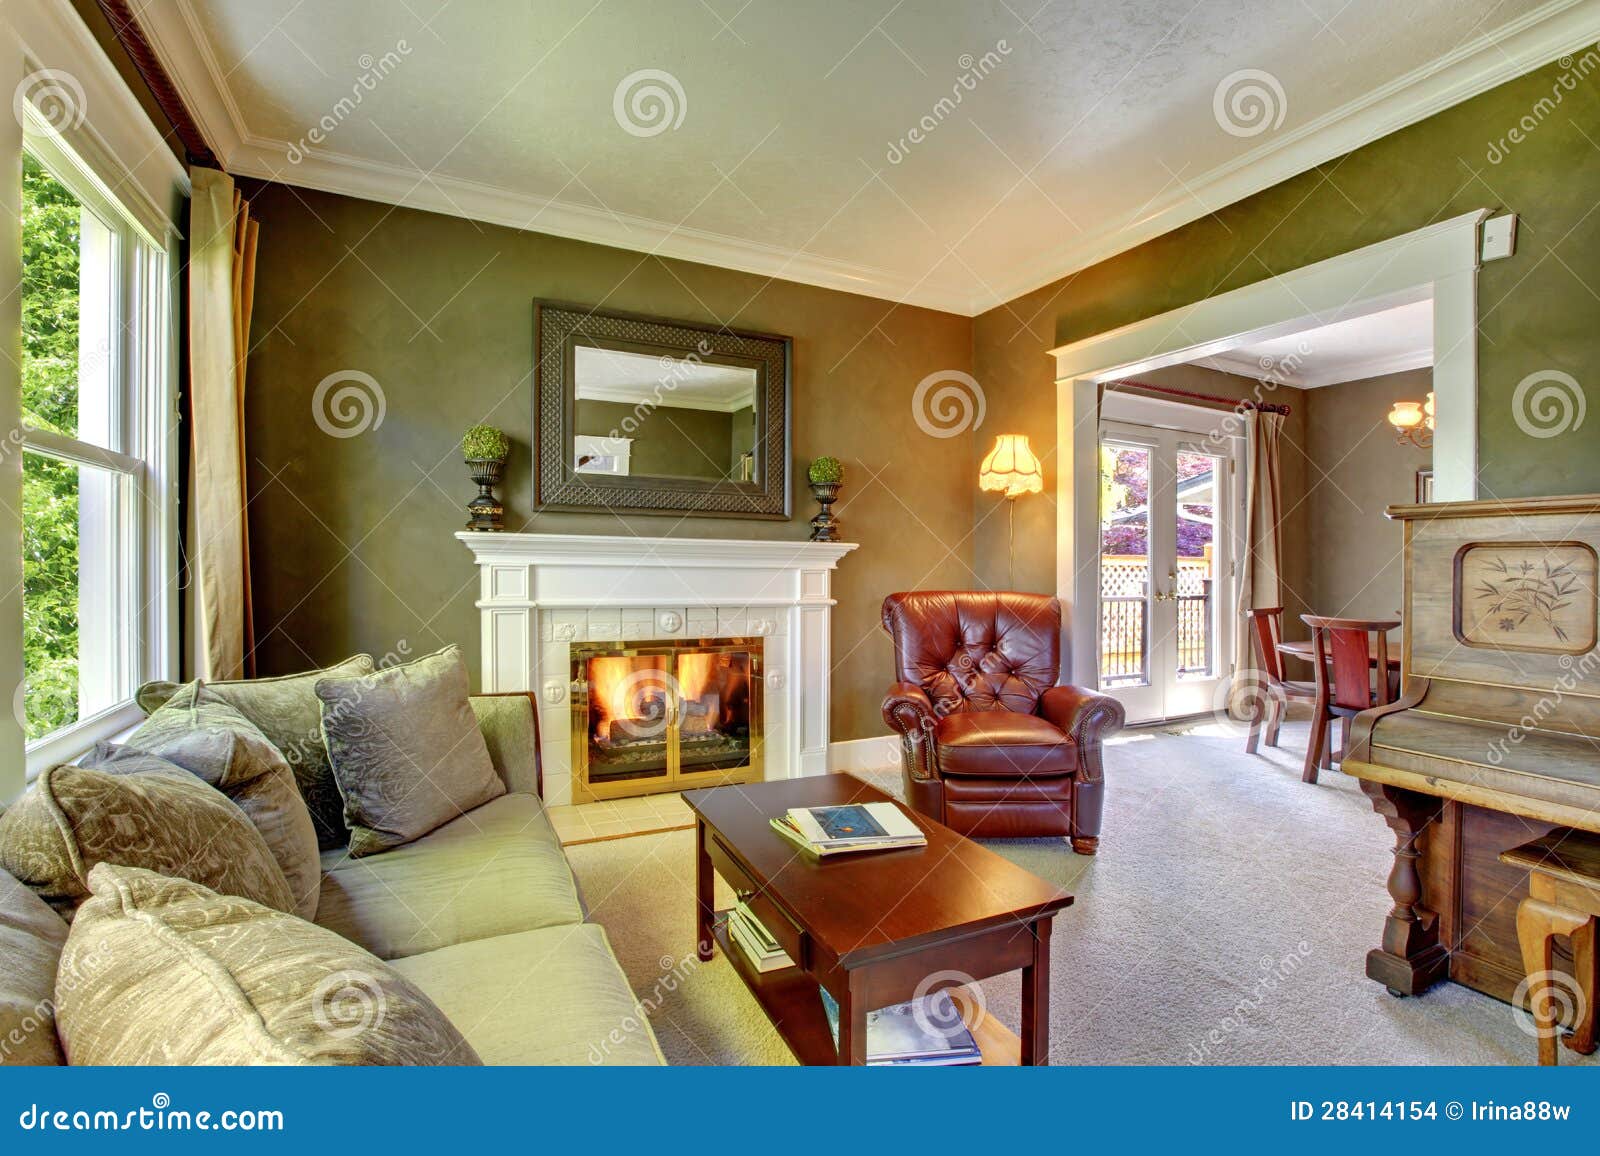 Image Result For Living Room Brown Furniture Decorating Ideas